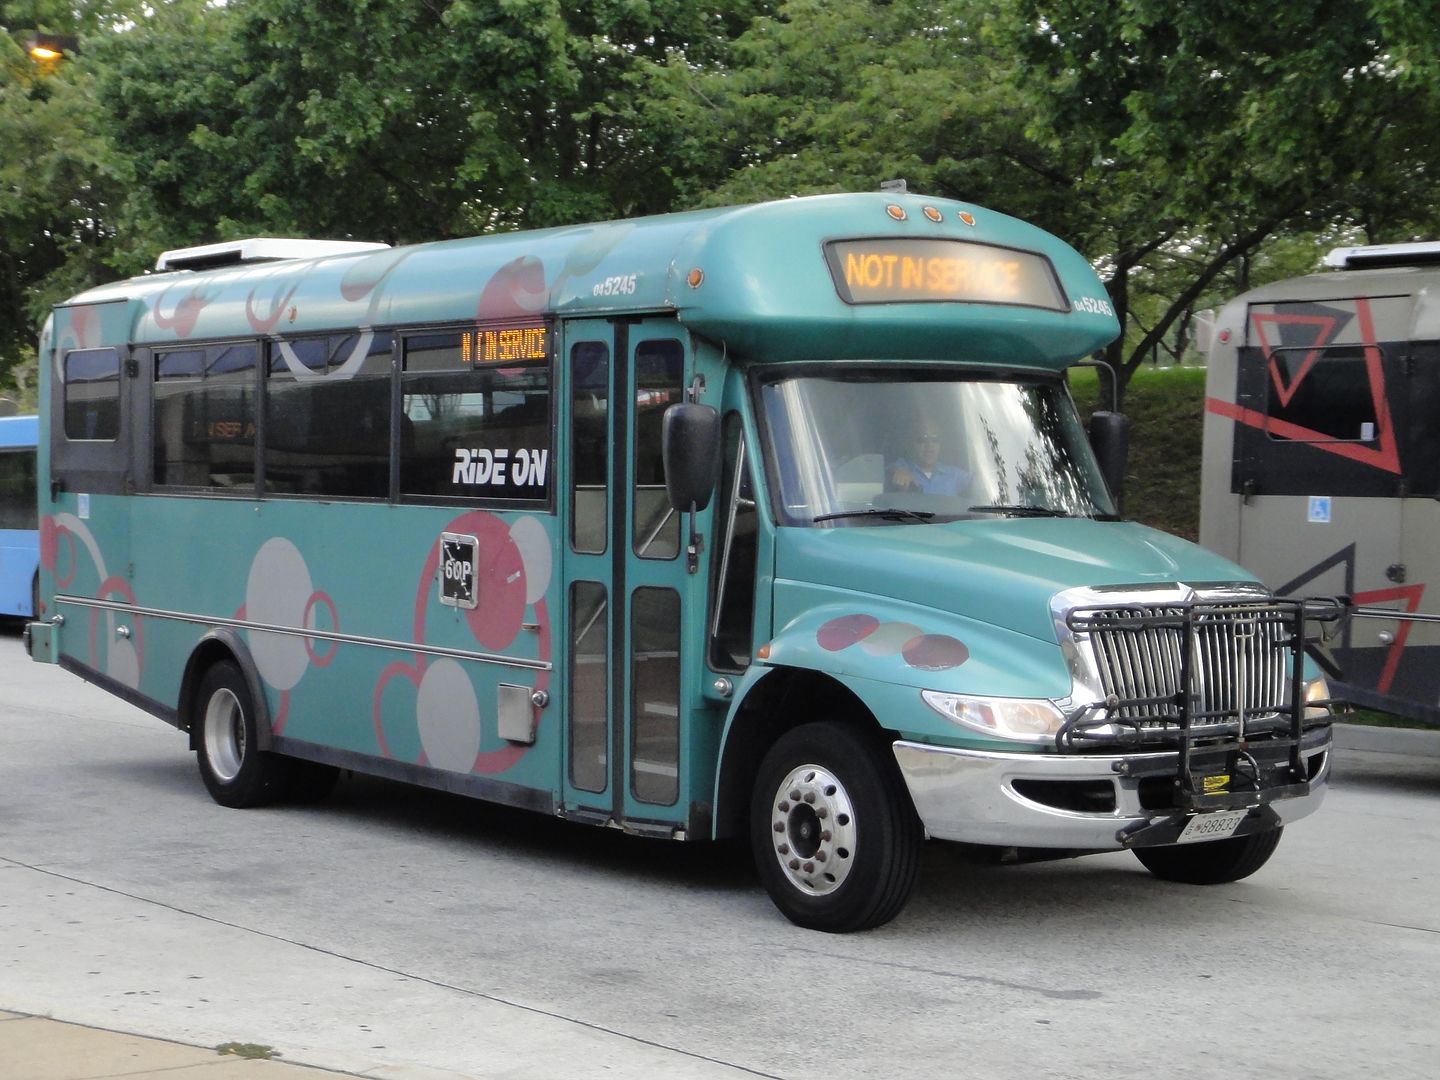 Providing convenient bus and rail service to the Denver metro area